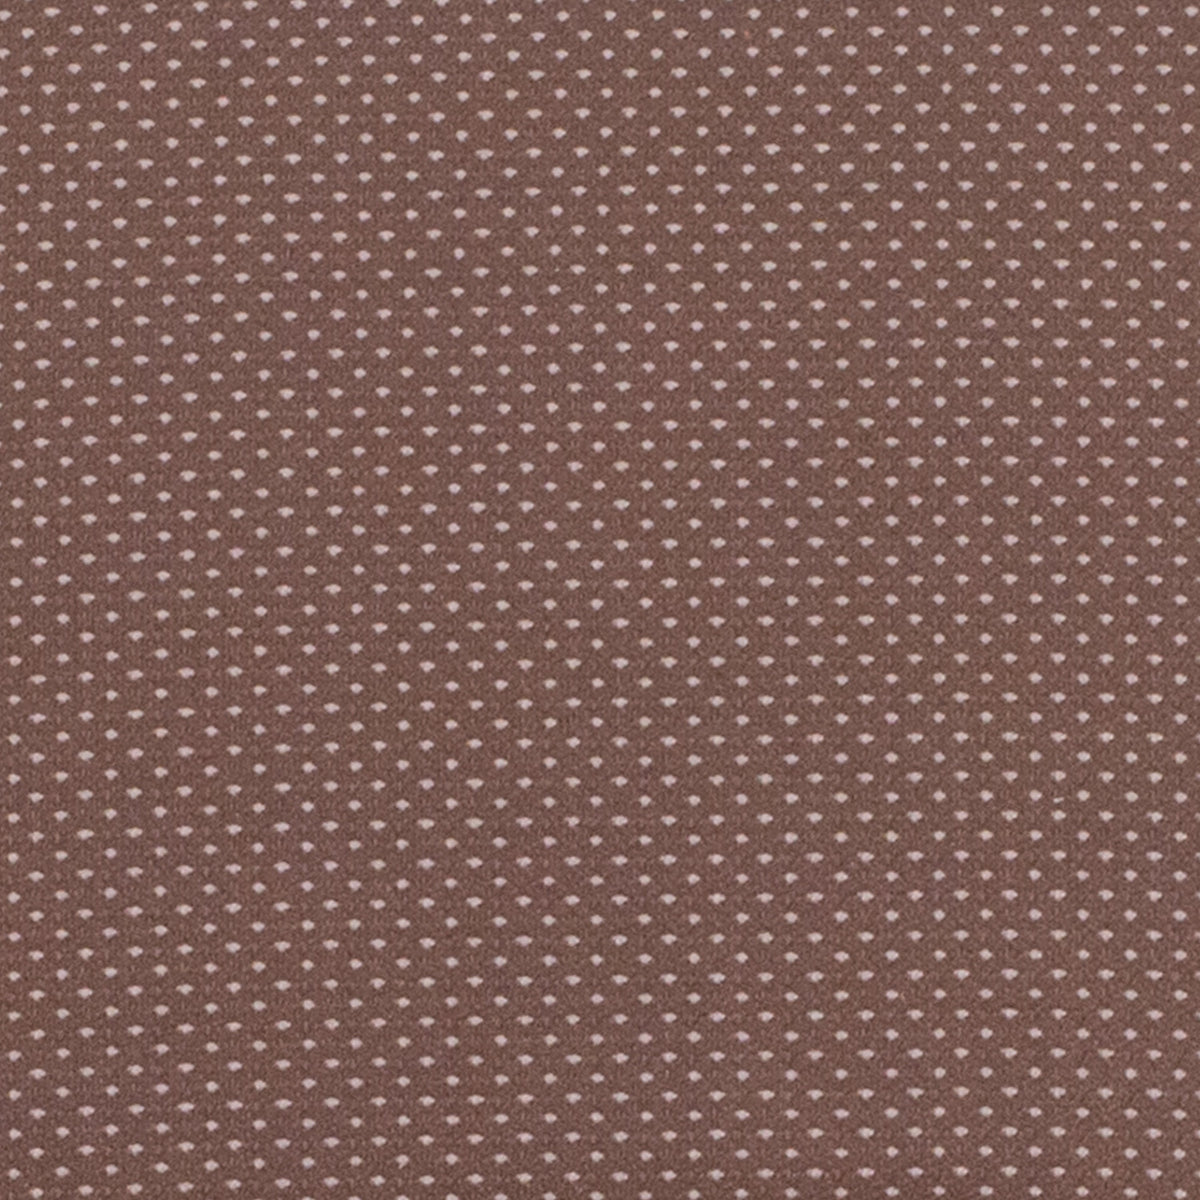 Brown Dot Fabric/Gold Vein Frame |#| 18.5inchW Stacking Church Chair in Brown Dot Fabric - Gold Vein Frame